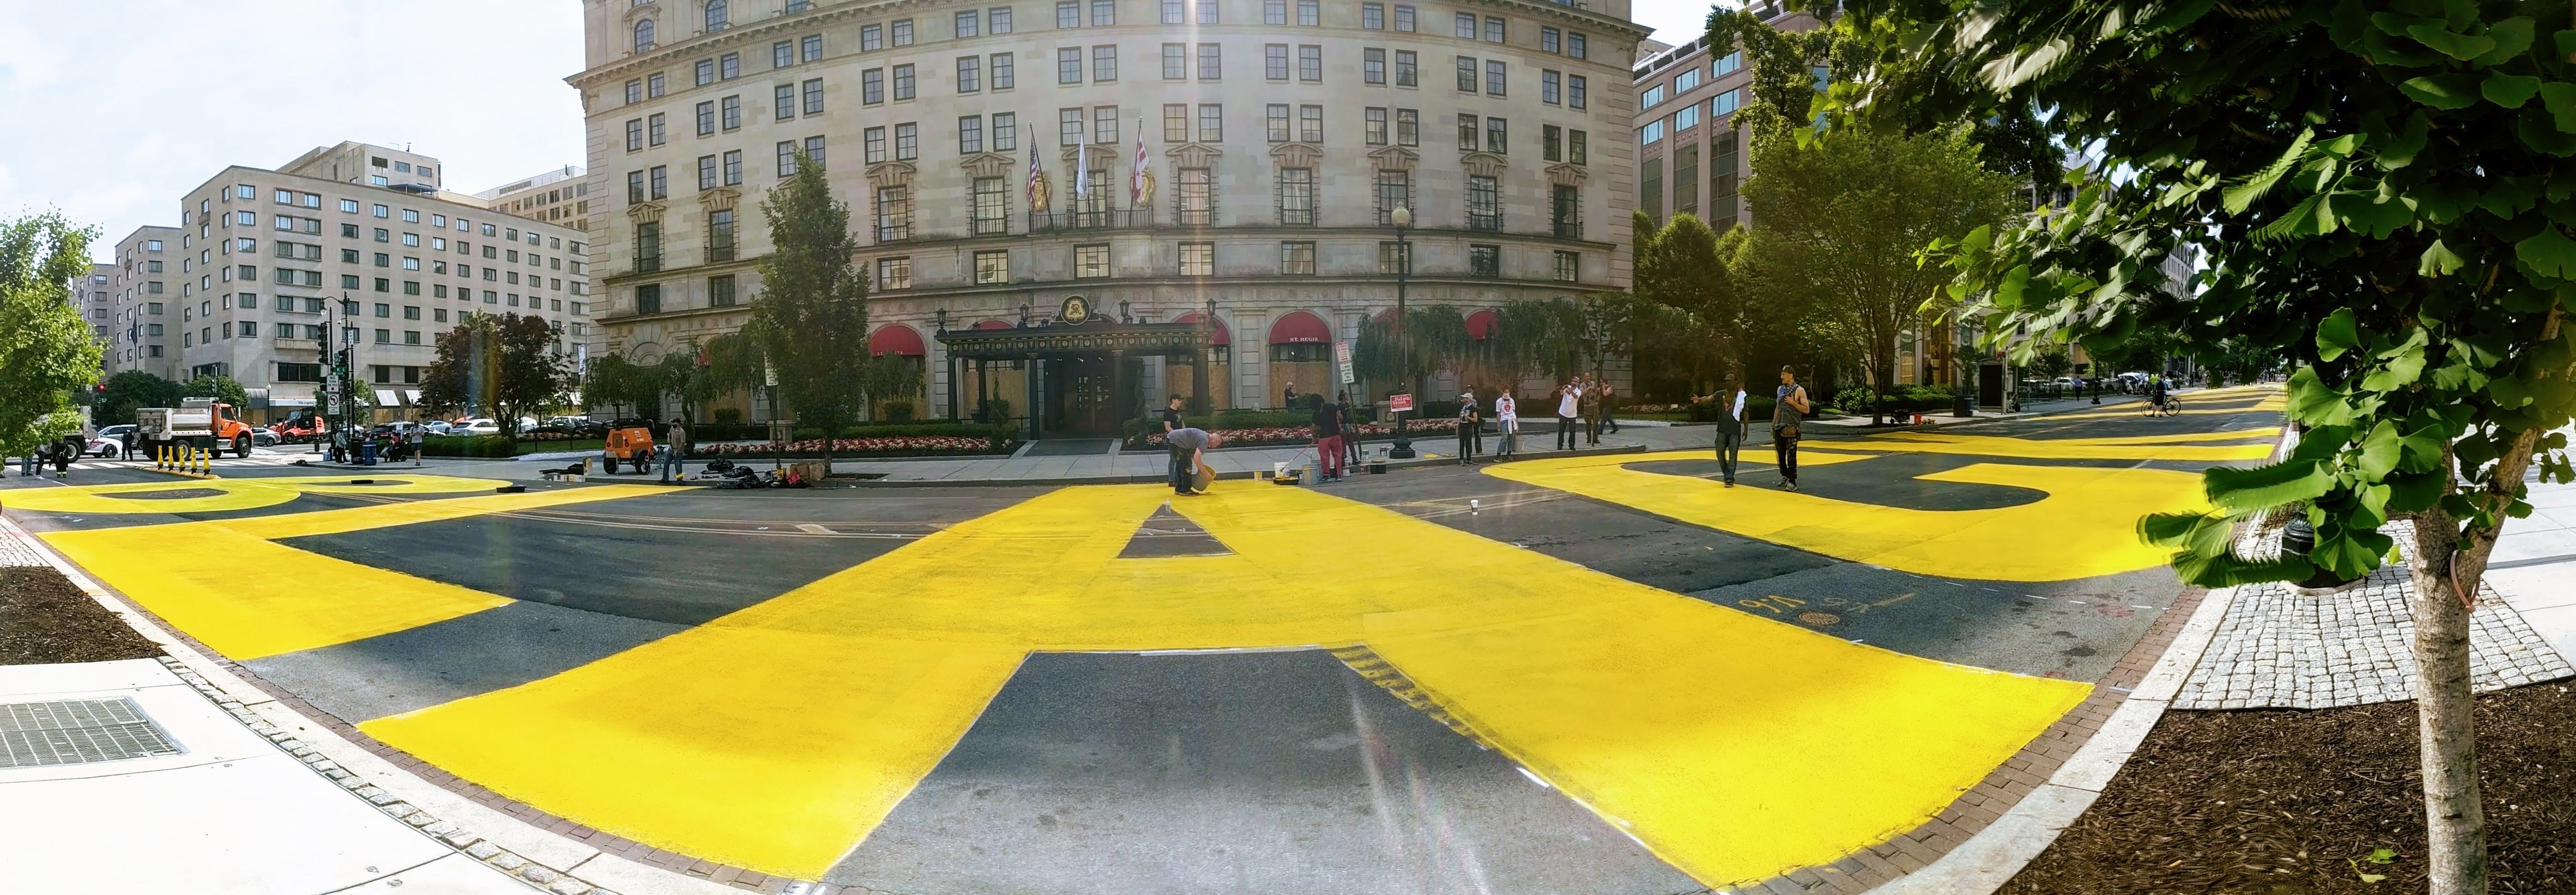 Panoskin Brings Google Street View to Black Lives Matter Plaza